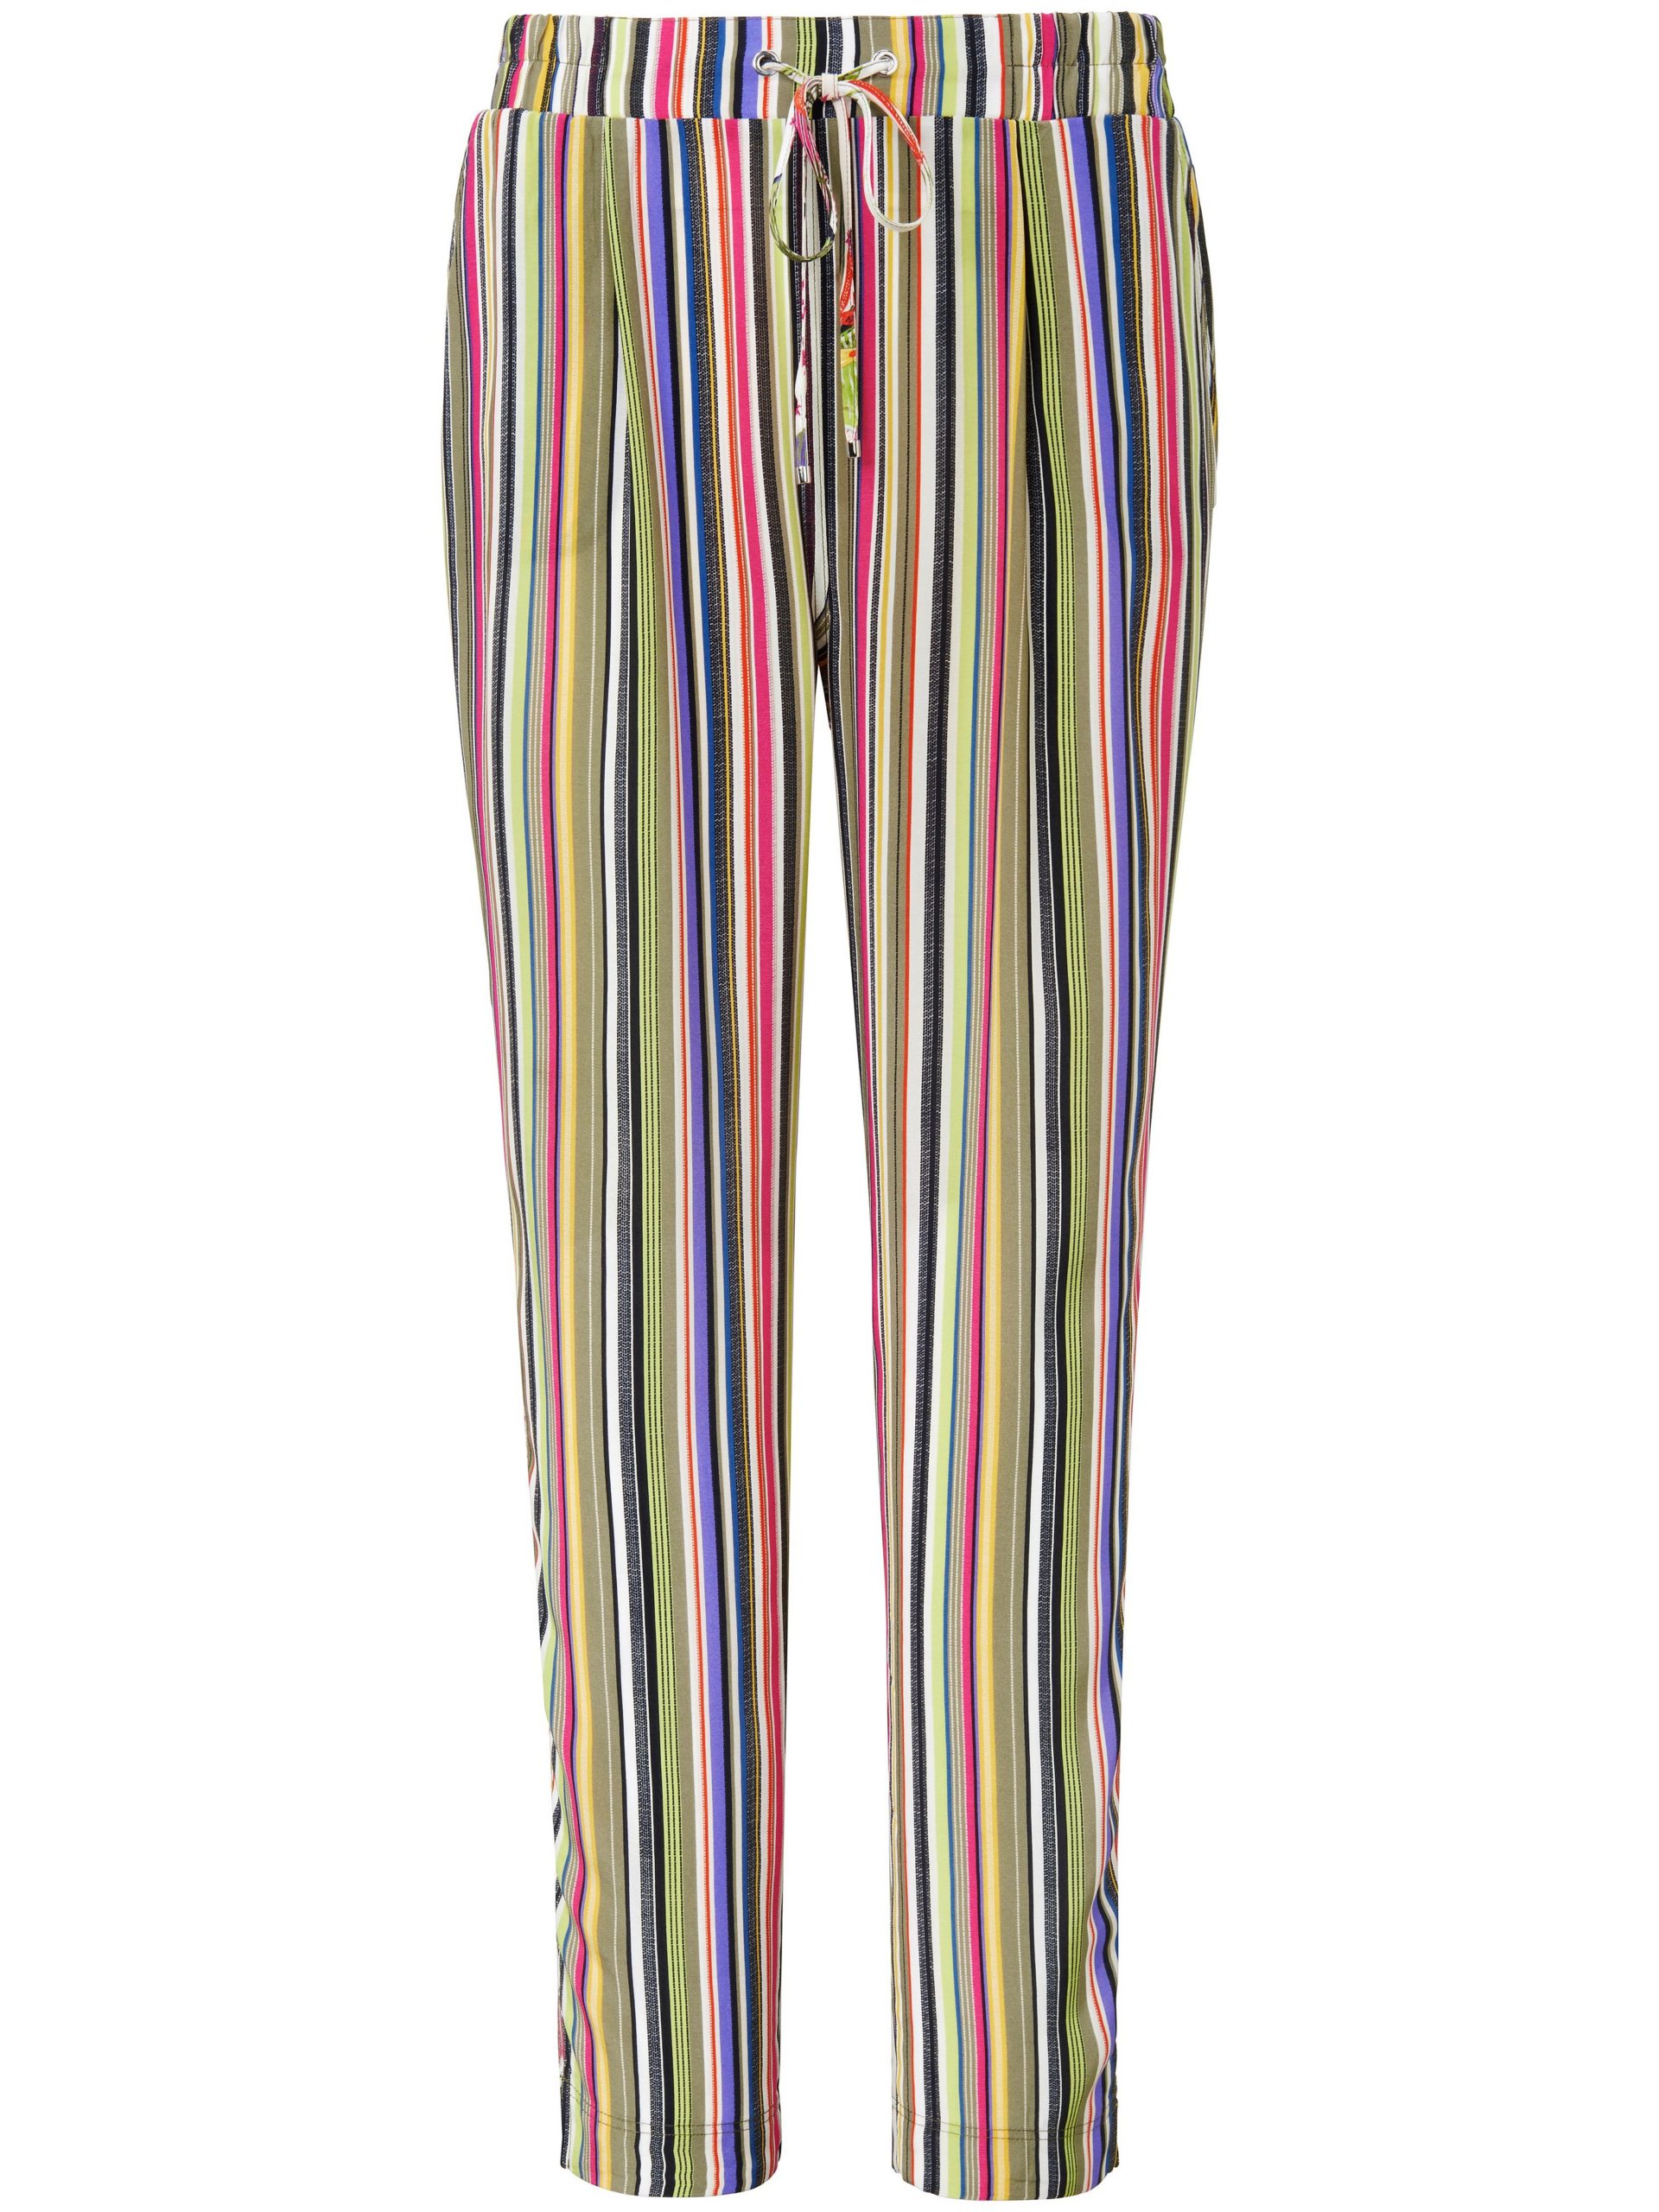 Enkellange broek in jogg-pant-stijl model Jil Van Basler multicolour Kopen